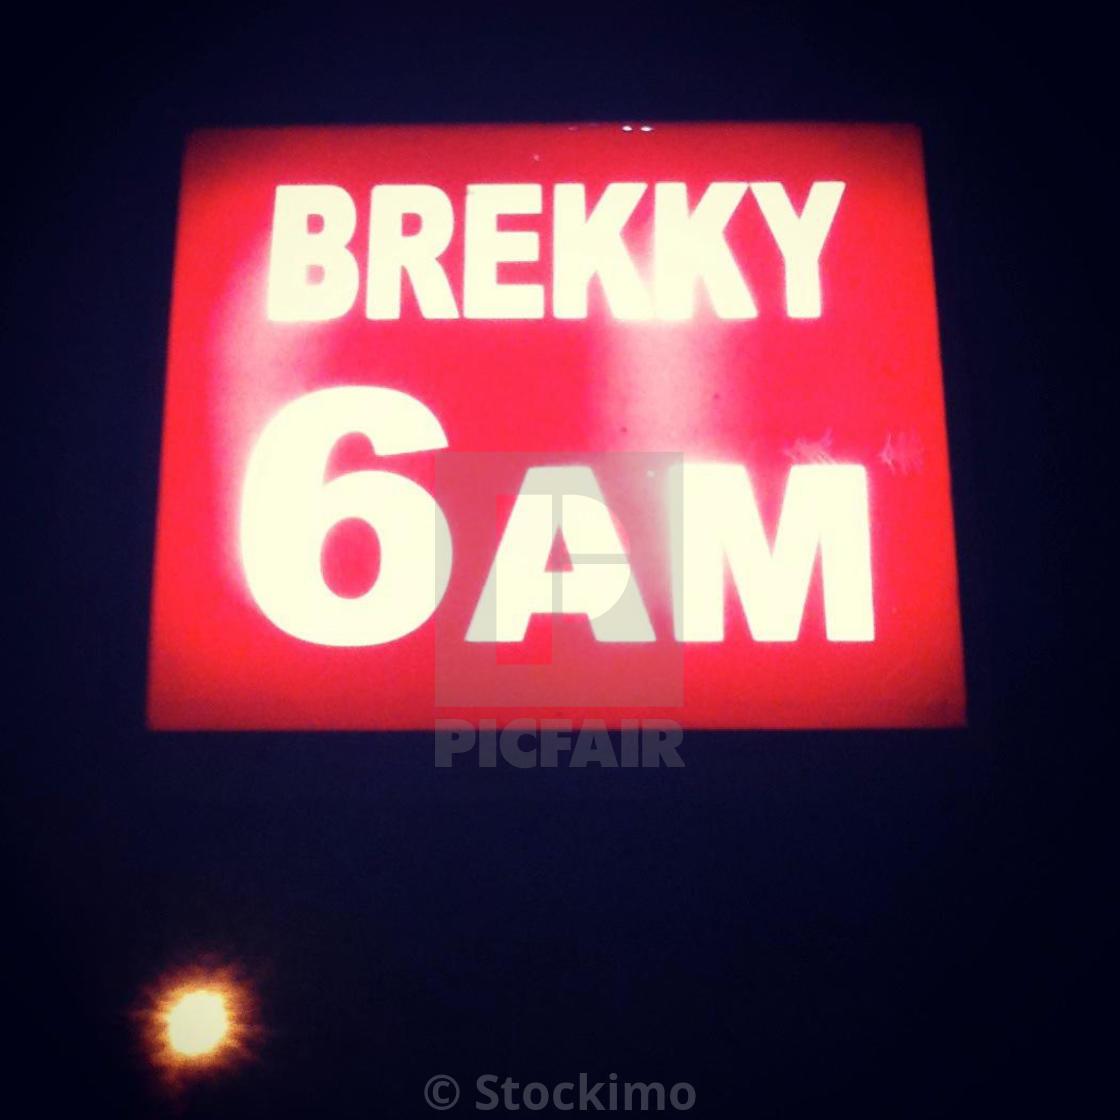 Breakfast serves at 6am sign in Australian slang Brekky - License, or print for £31.00 | Photos | Picfair